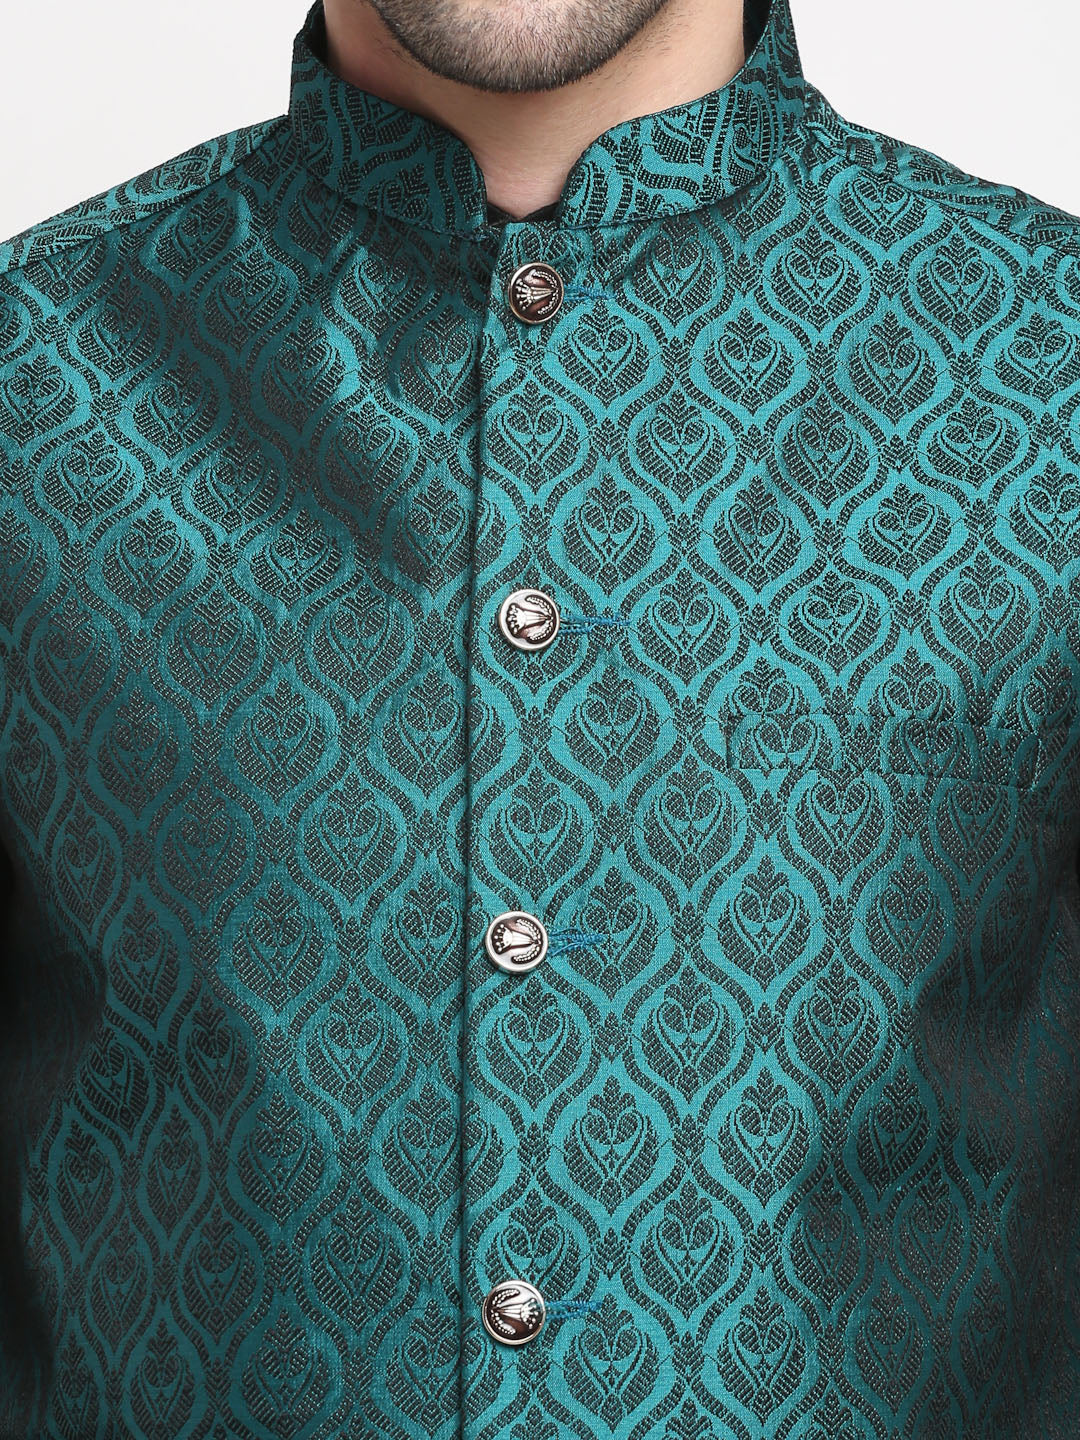 Jompers Men's Green Self-Designed Green Waistcoat ( JOWC 4027Green )